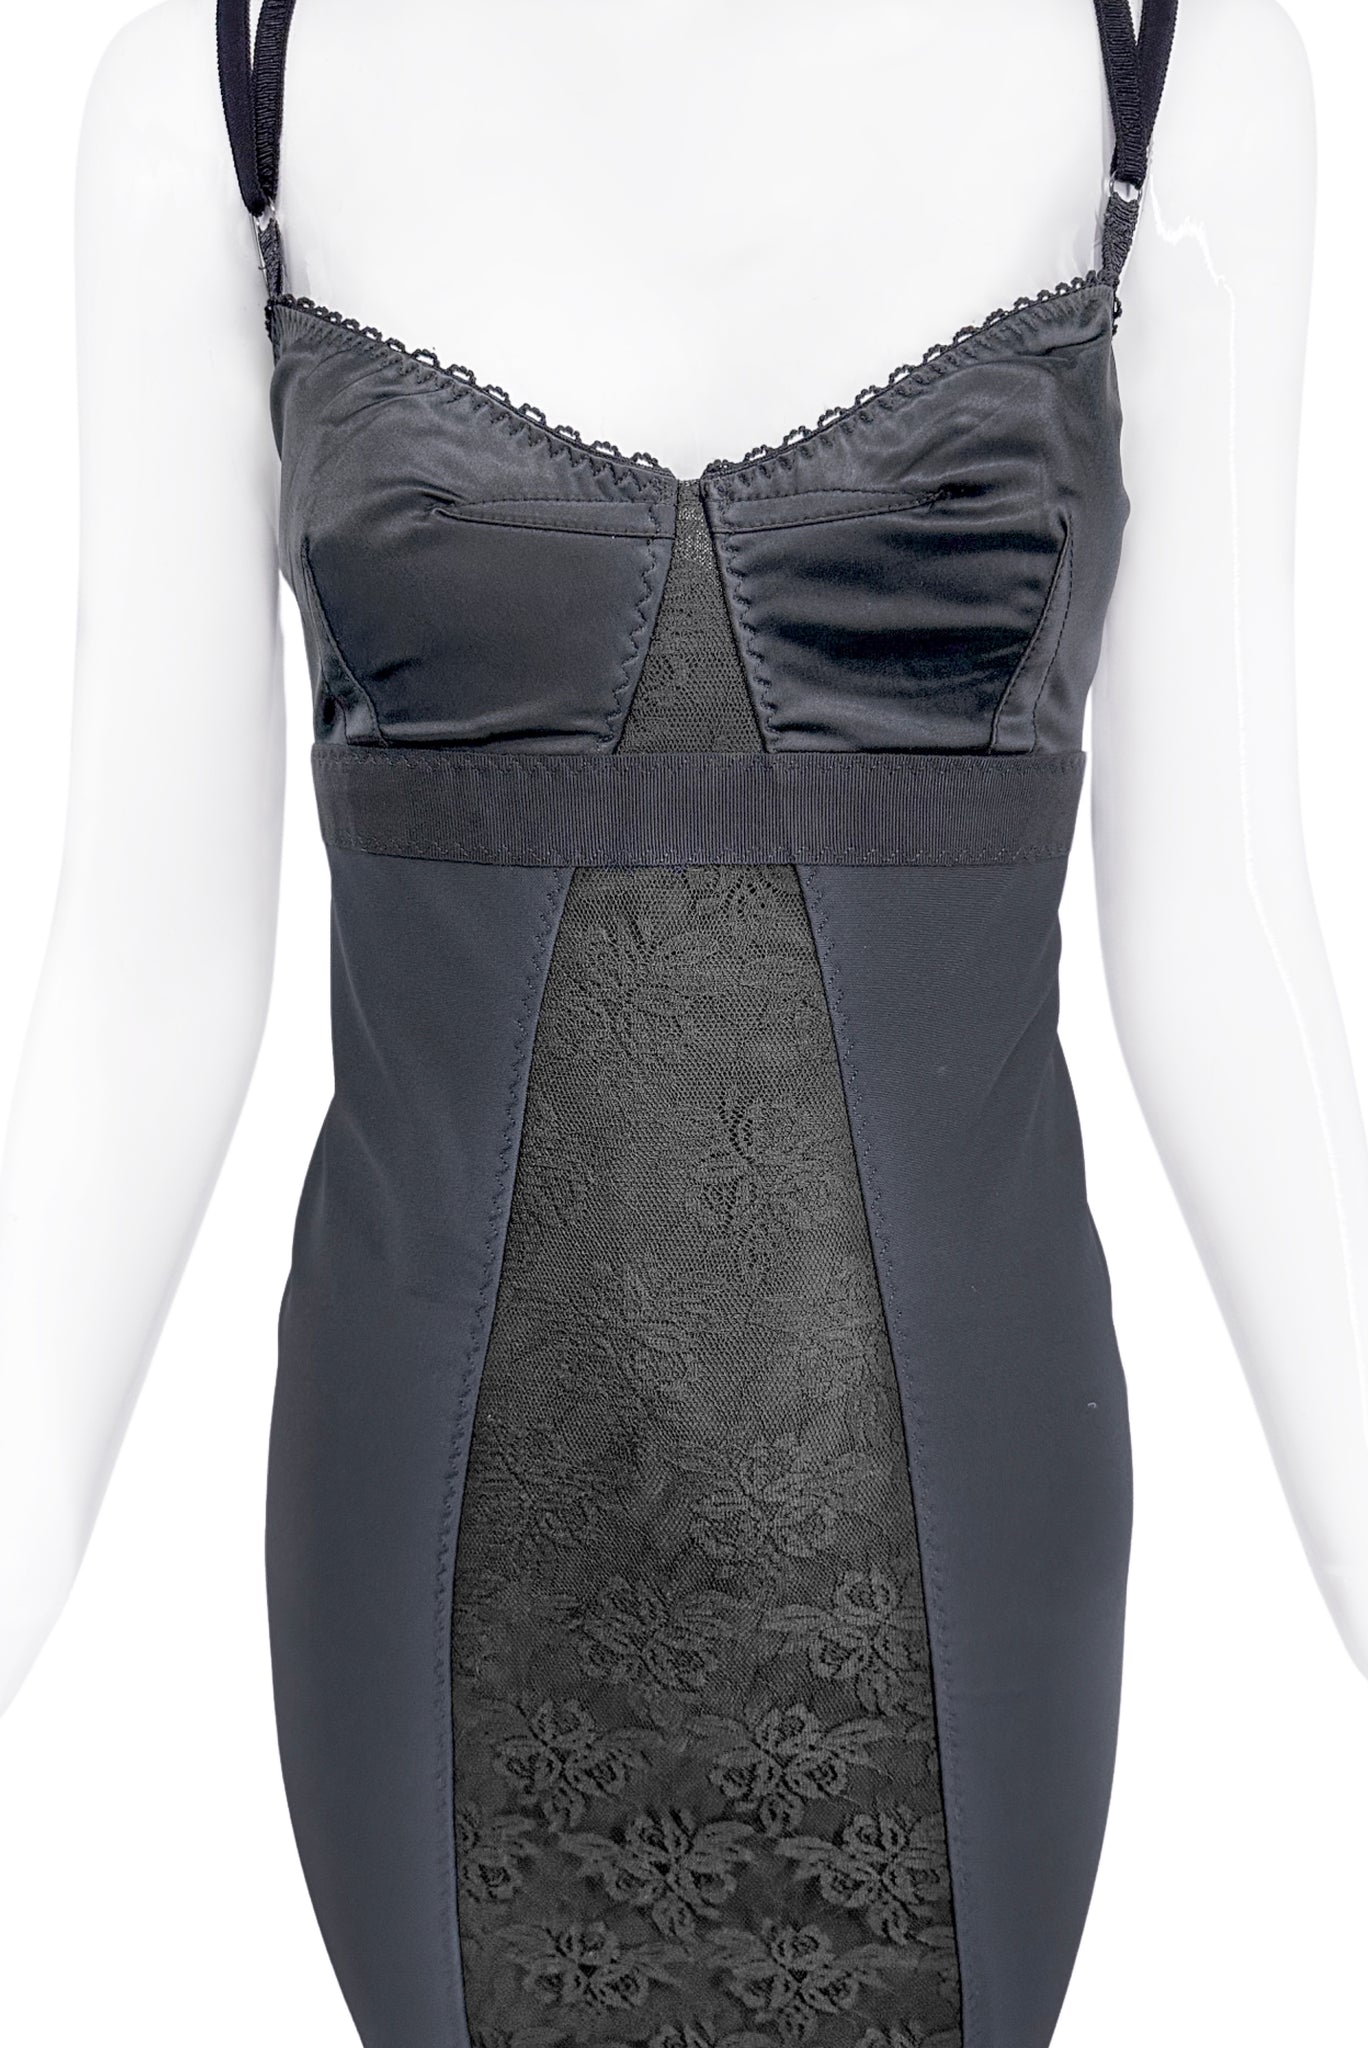 D&G by Dolce & Gabbana Black Mini Bodycon Girdle Dress with Black